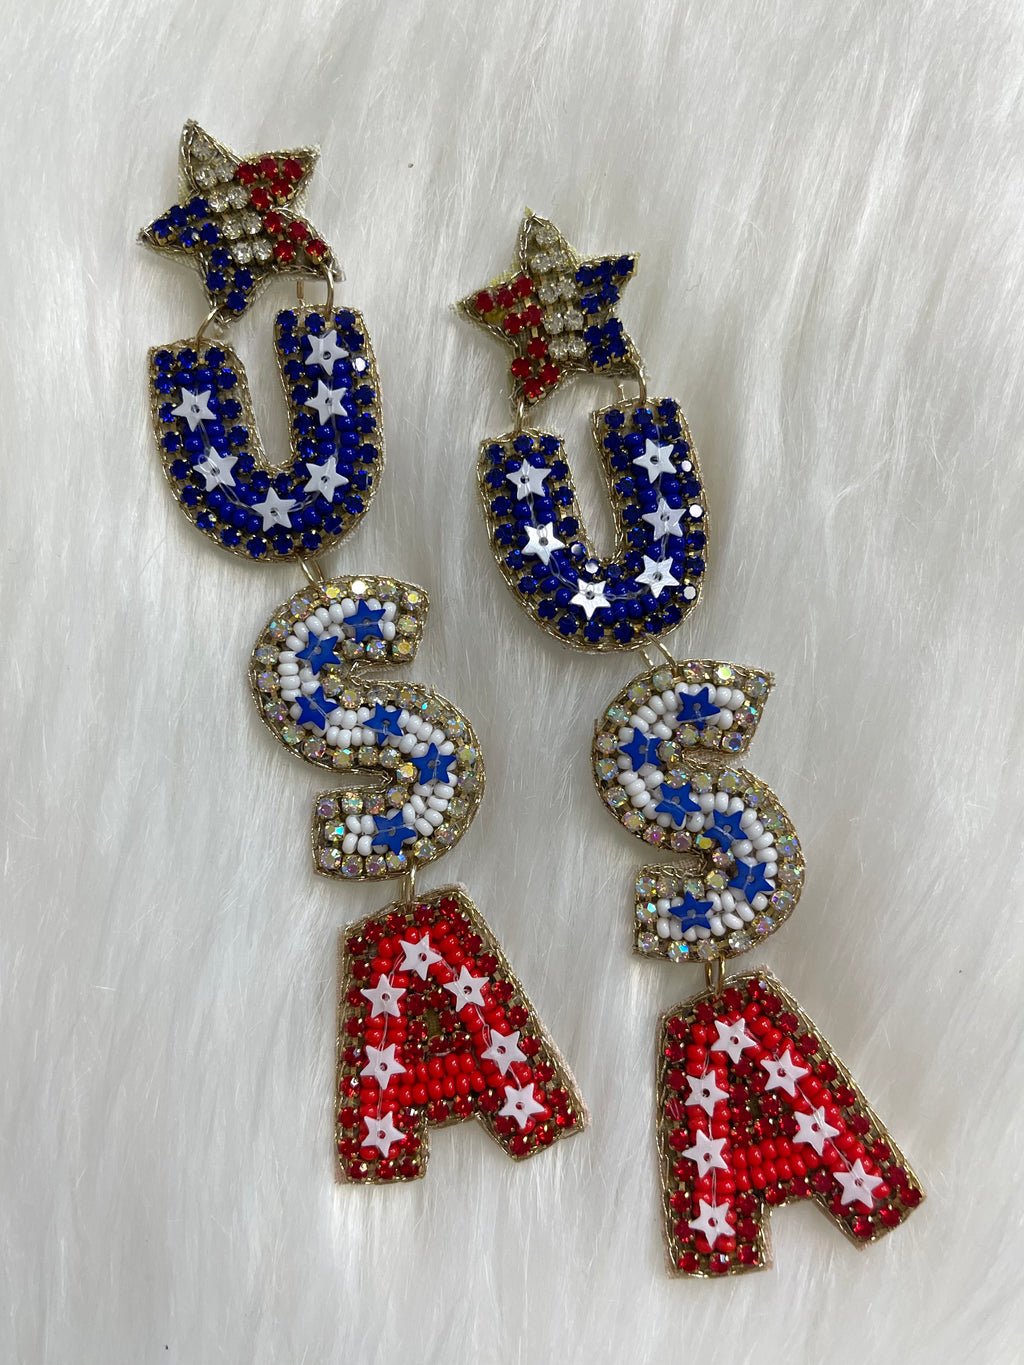 USA Firework earrings